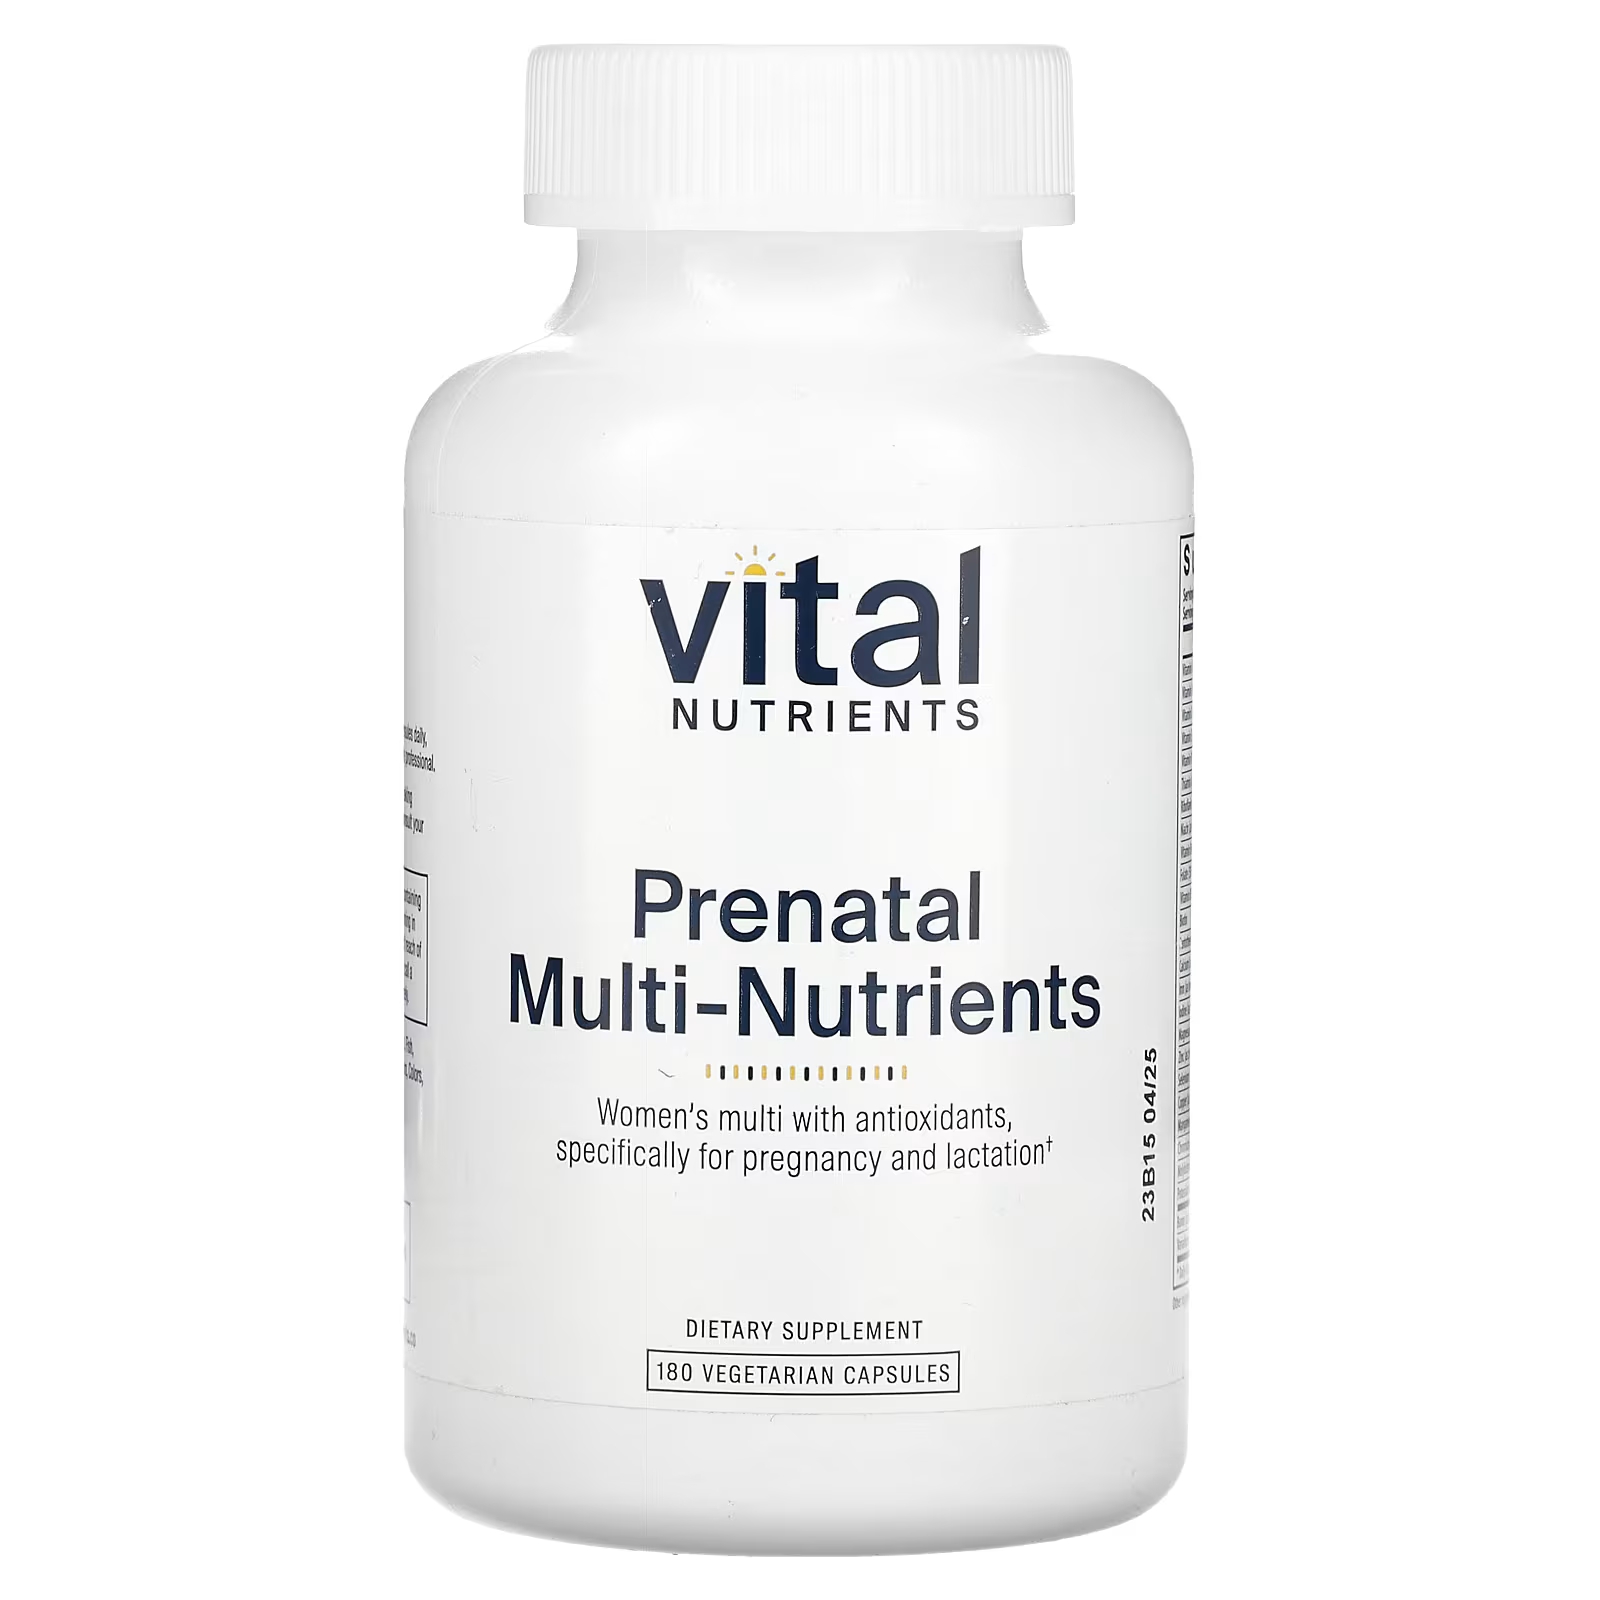 Пищевая добавка Vital Nutrients Prenatal Multi-Nutrients, 180 капсул